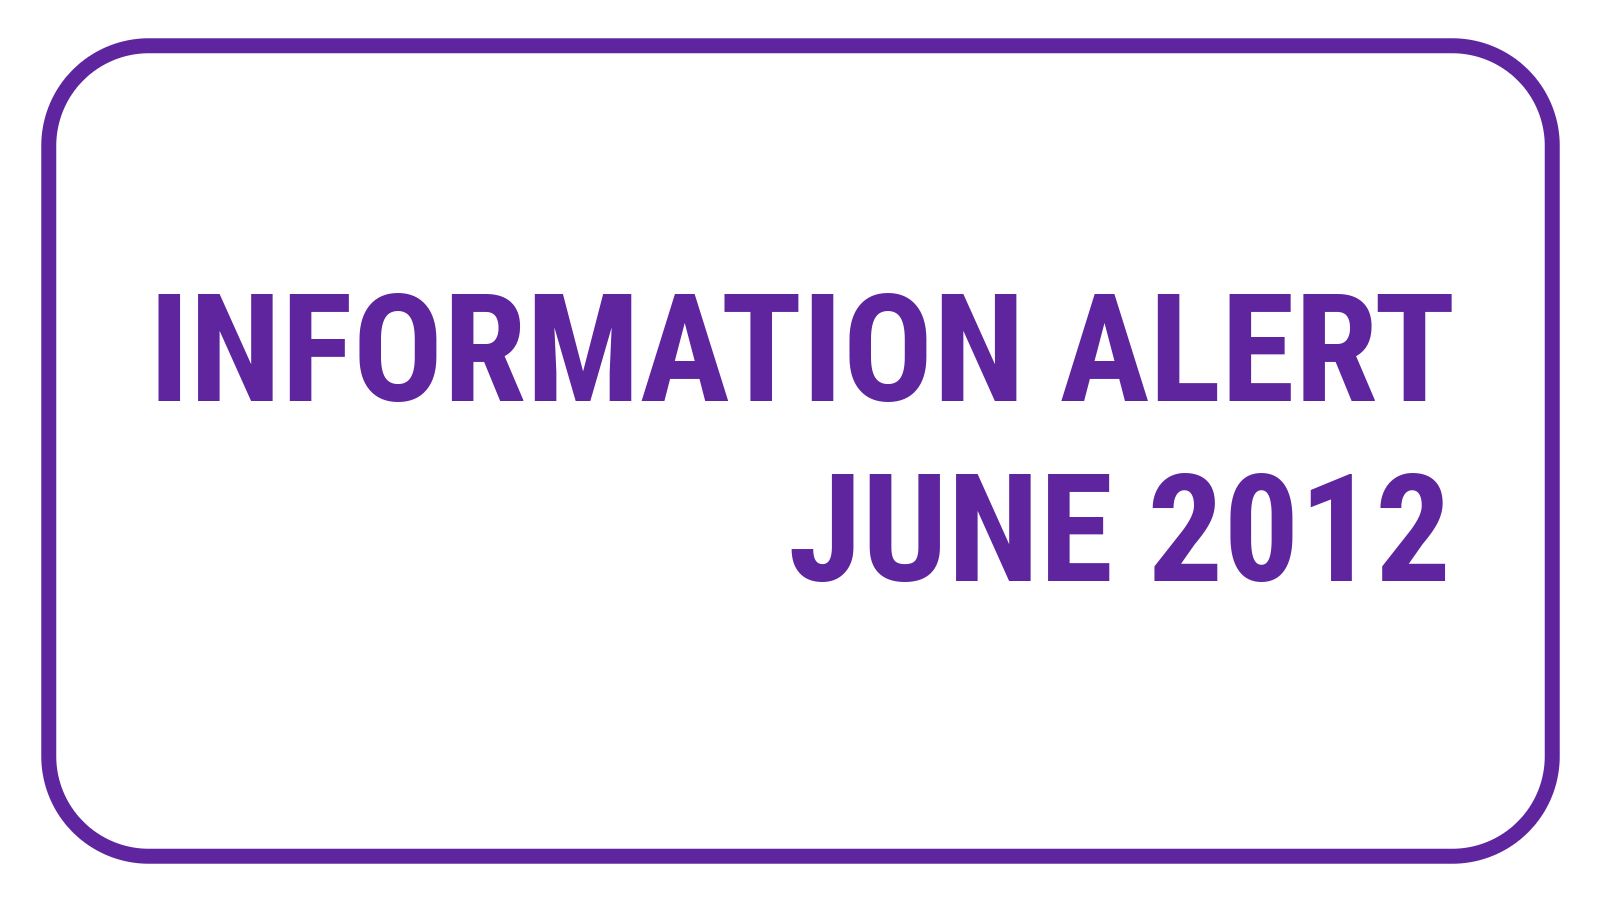 Information Alert June 2012